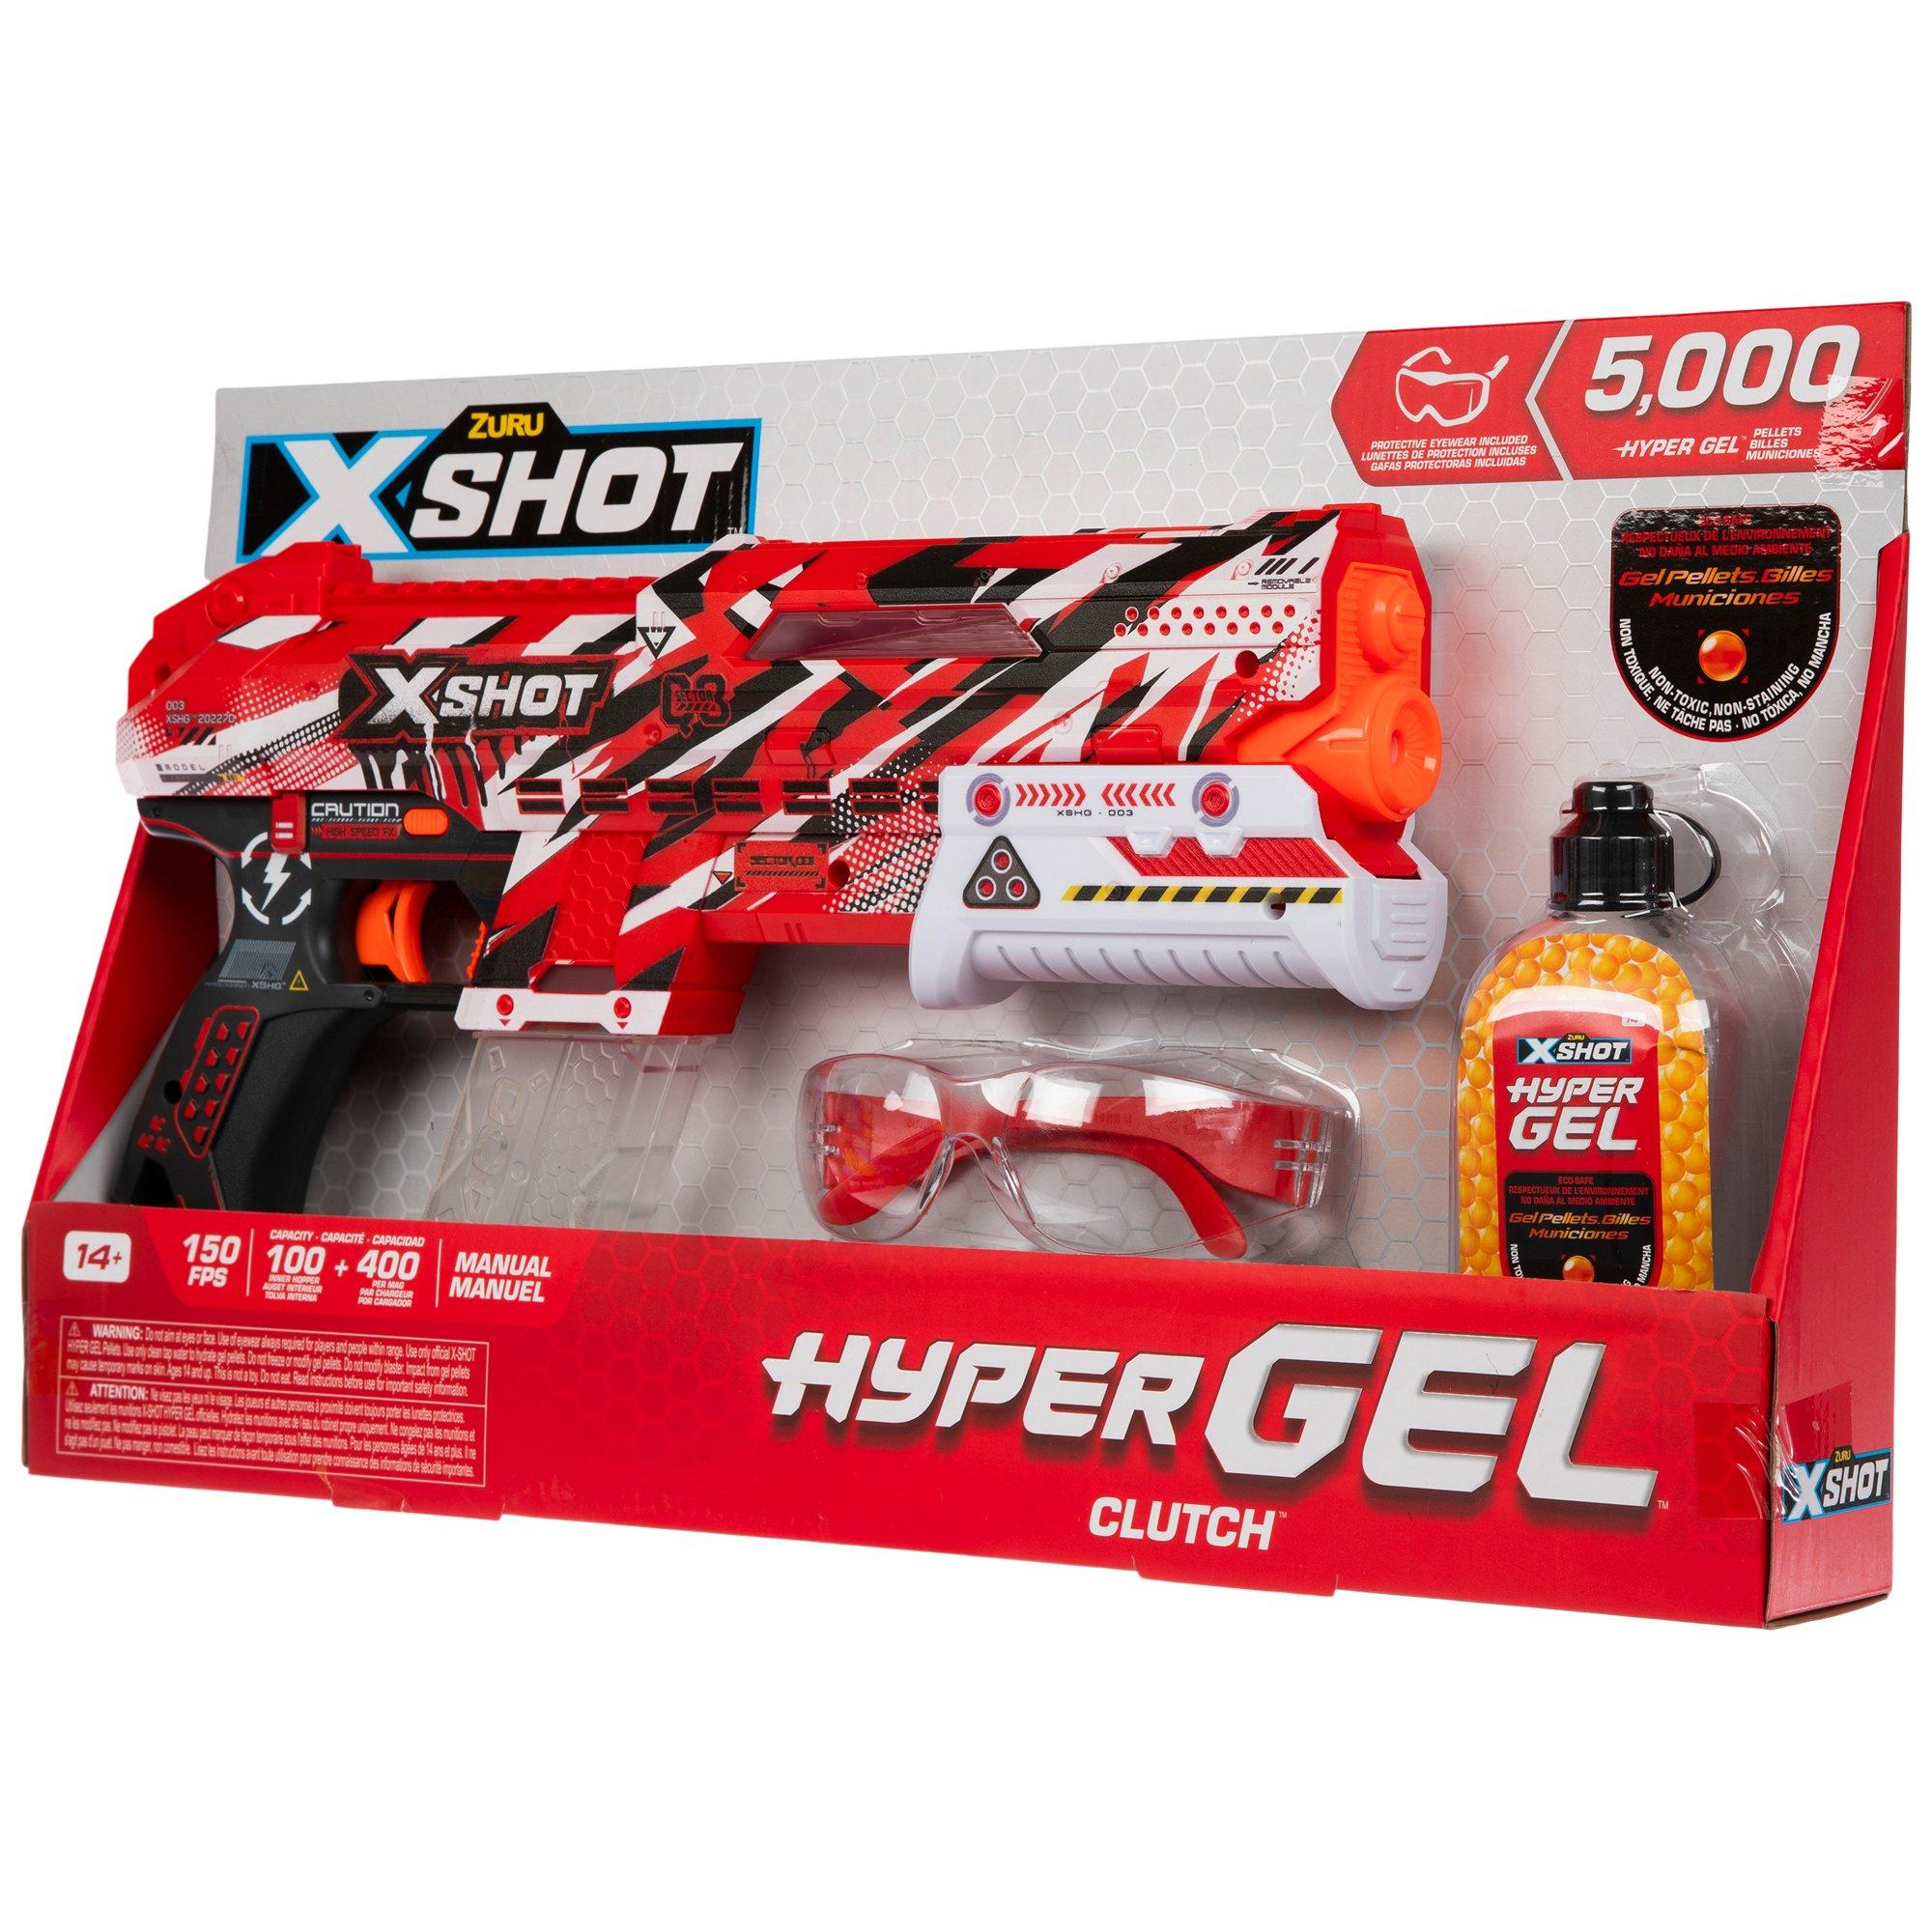 Zuru X-Shot Hyper Gel Clutch Toy Blaster, Hobby Lobby